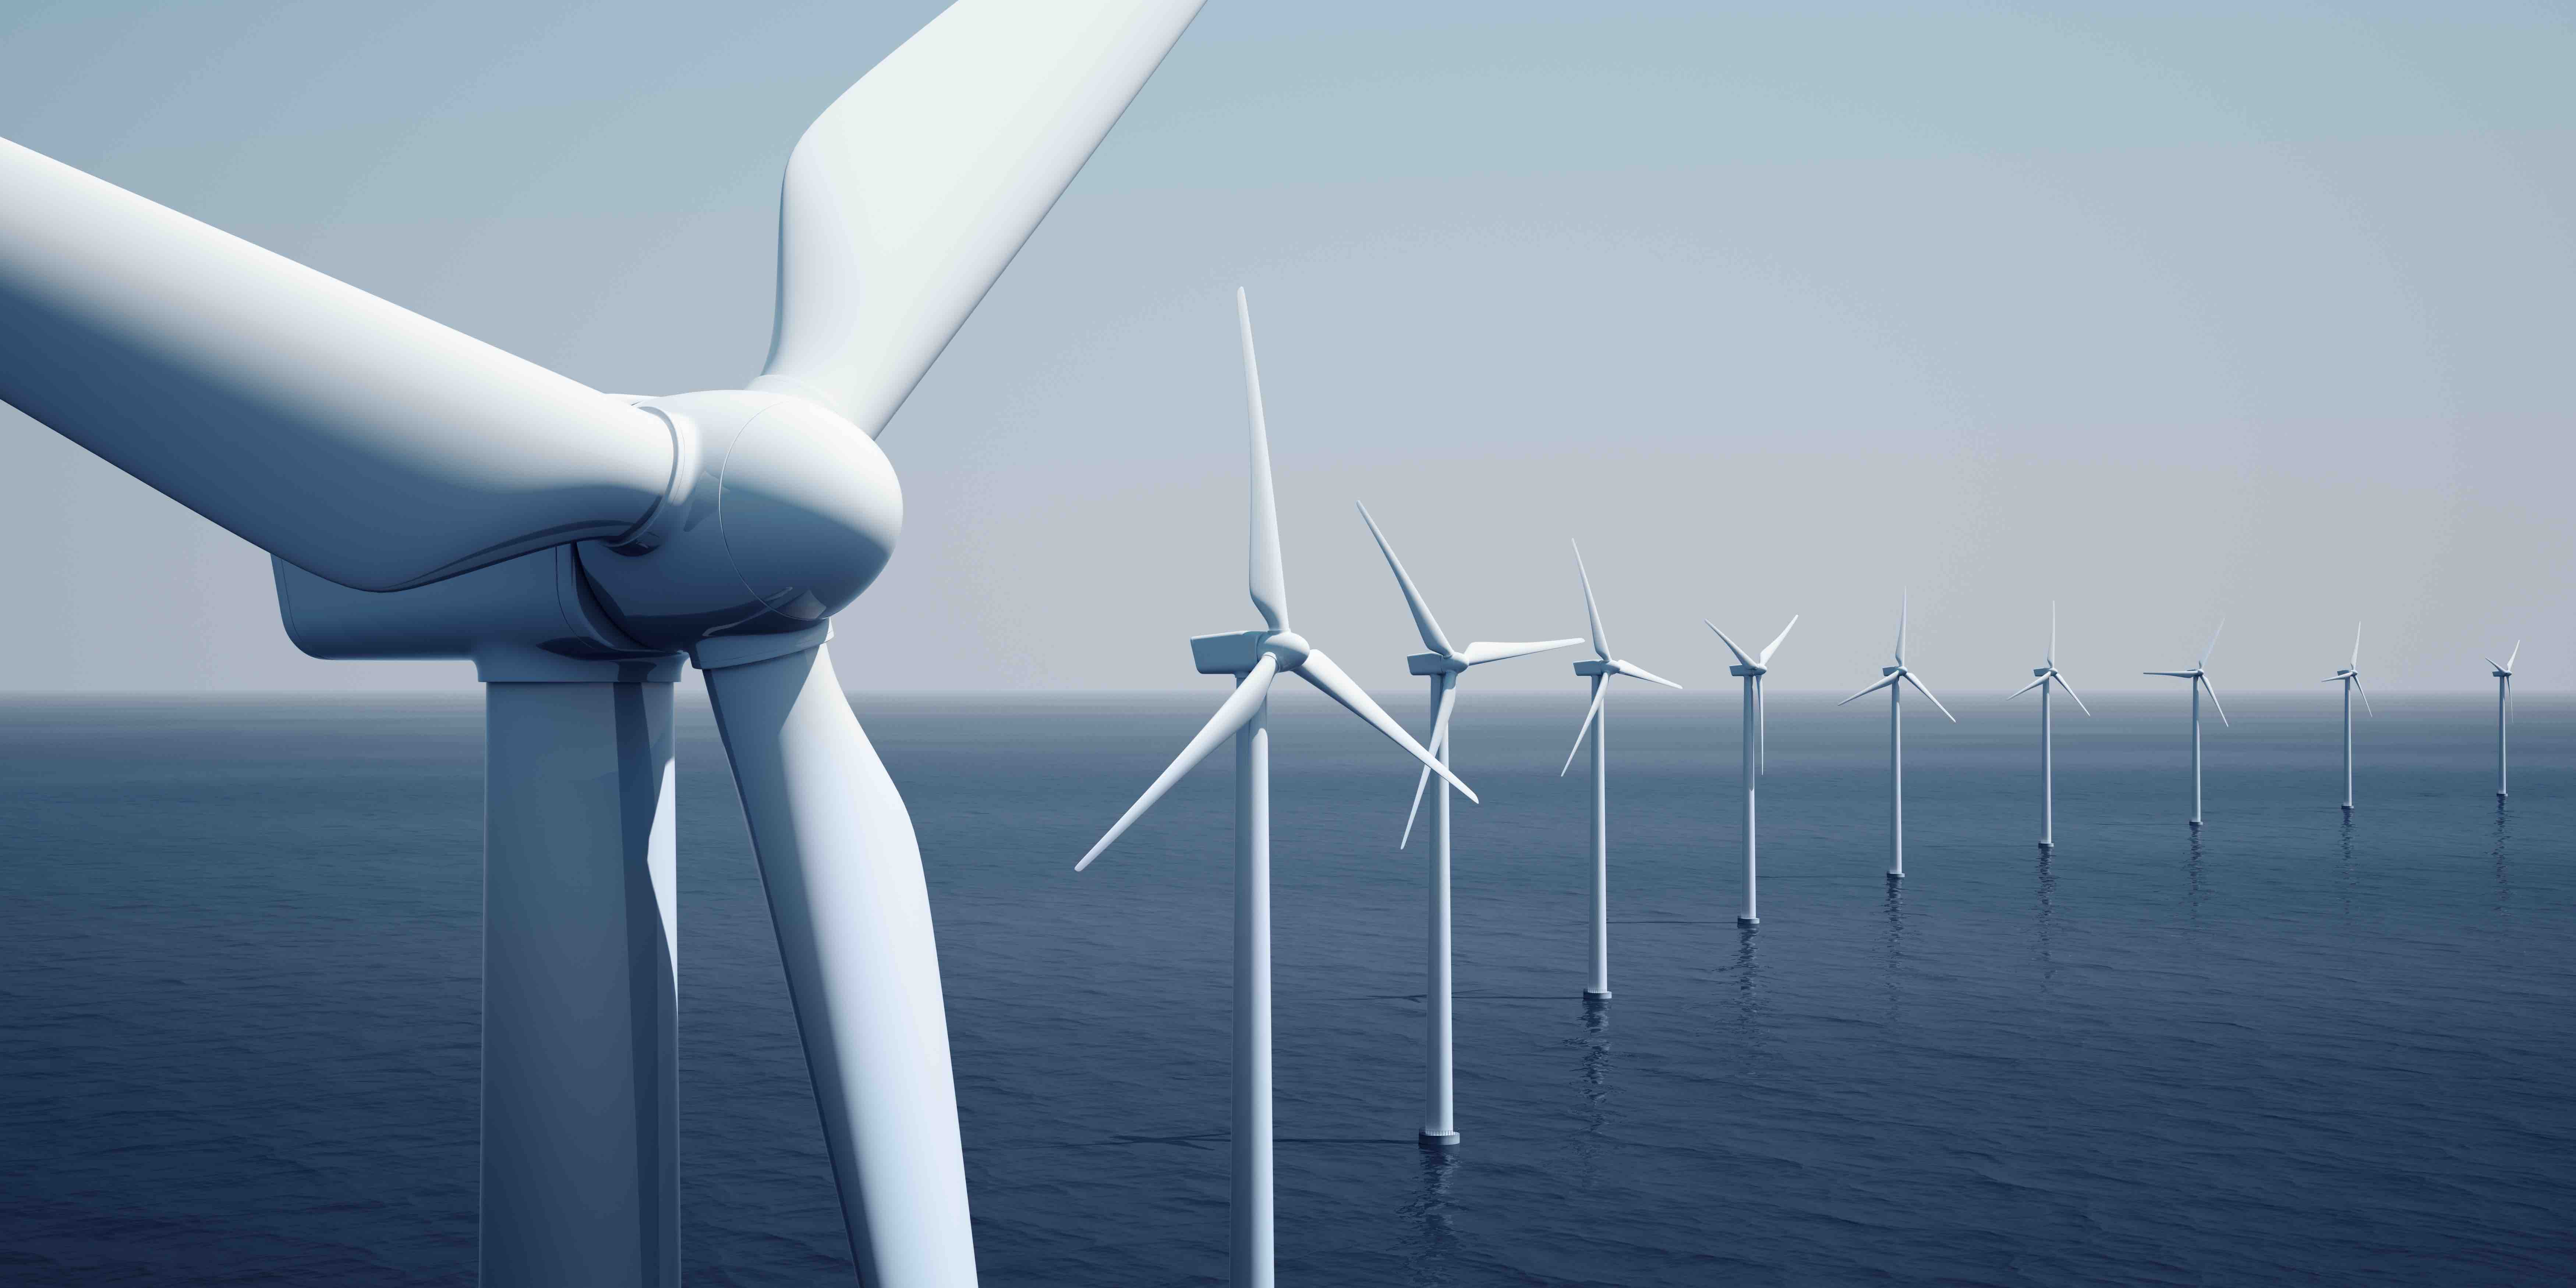 PGE invites partners to build wind farms in Baltic Sea - MarinePoland.com